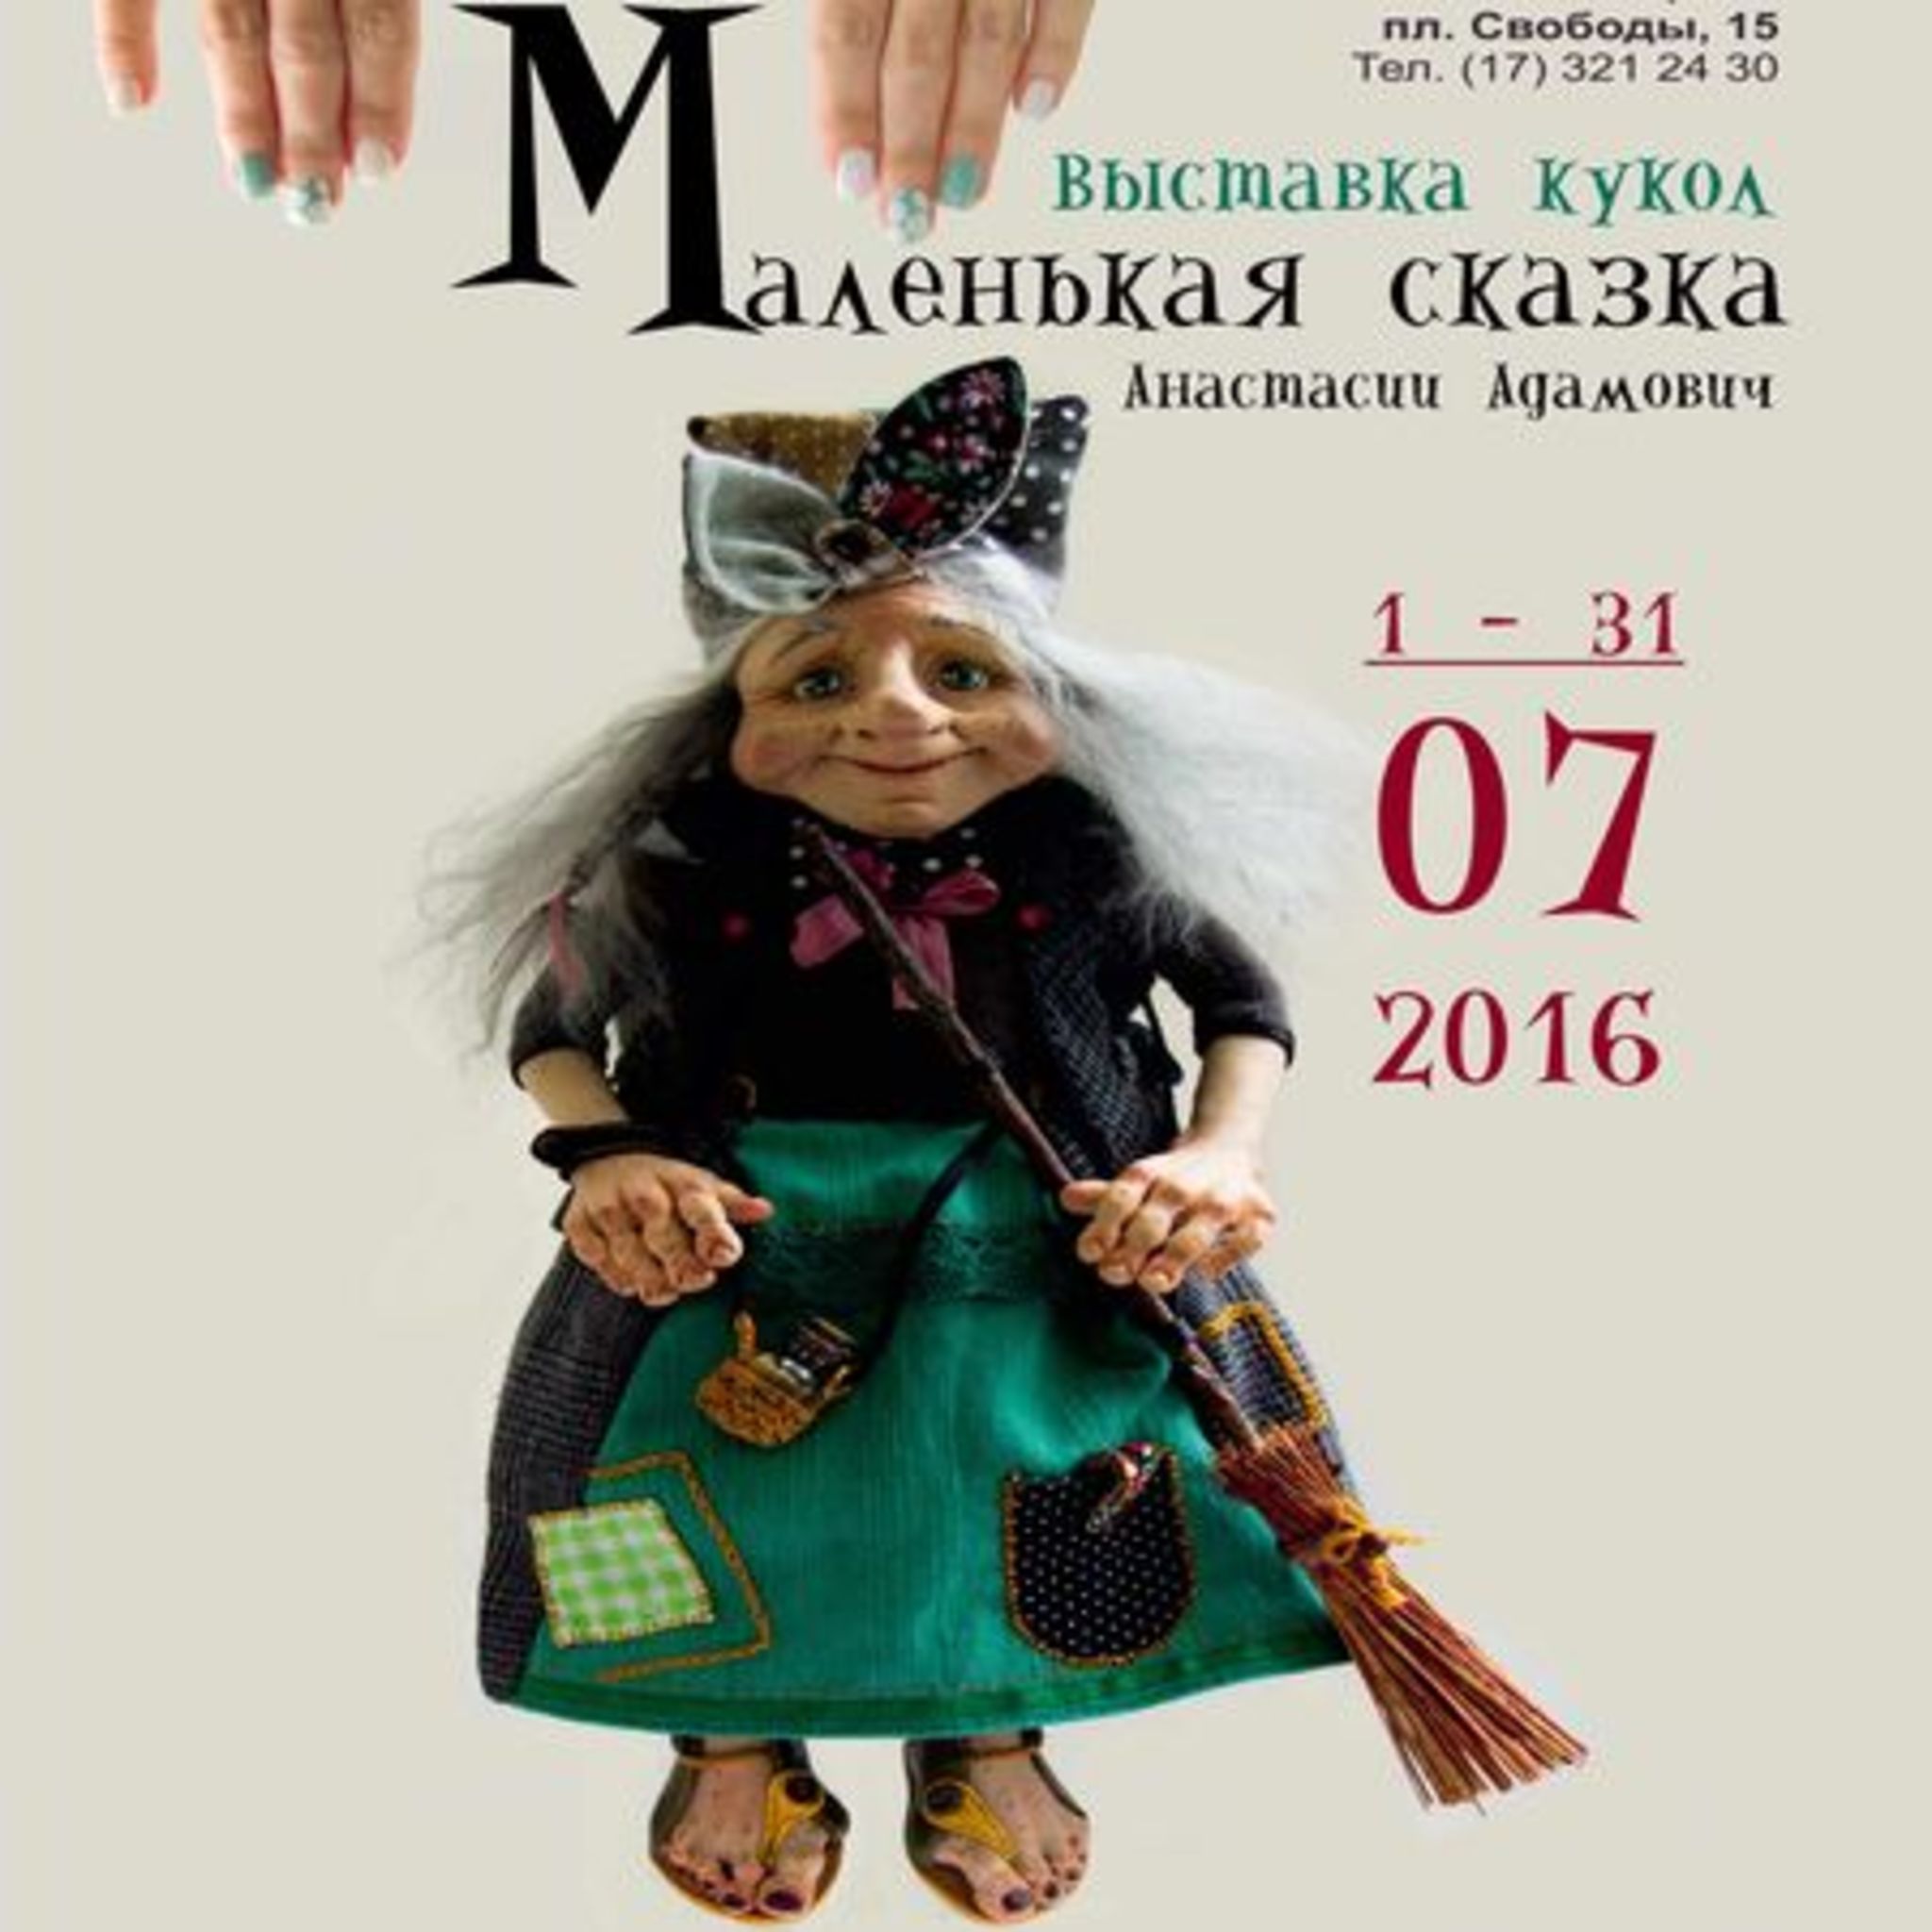 Exhibition of dolls Little Tale Anastasia Adamovich